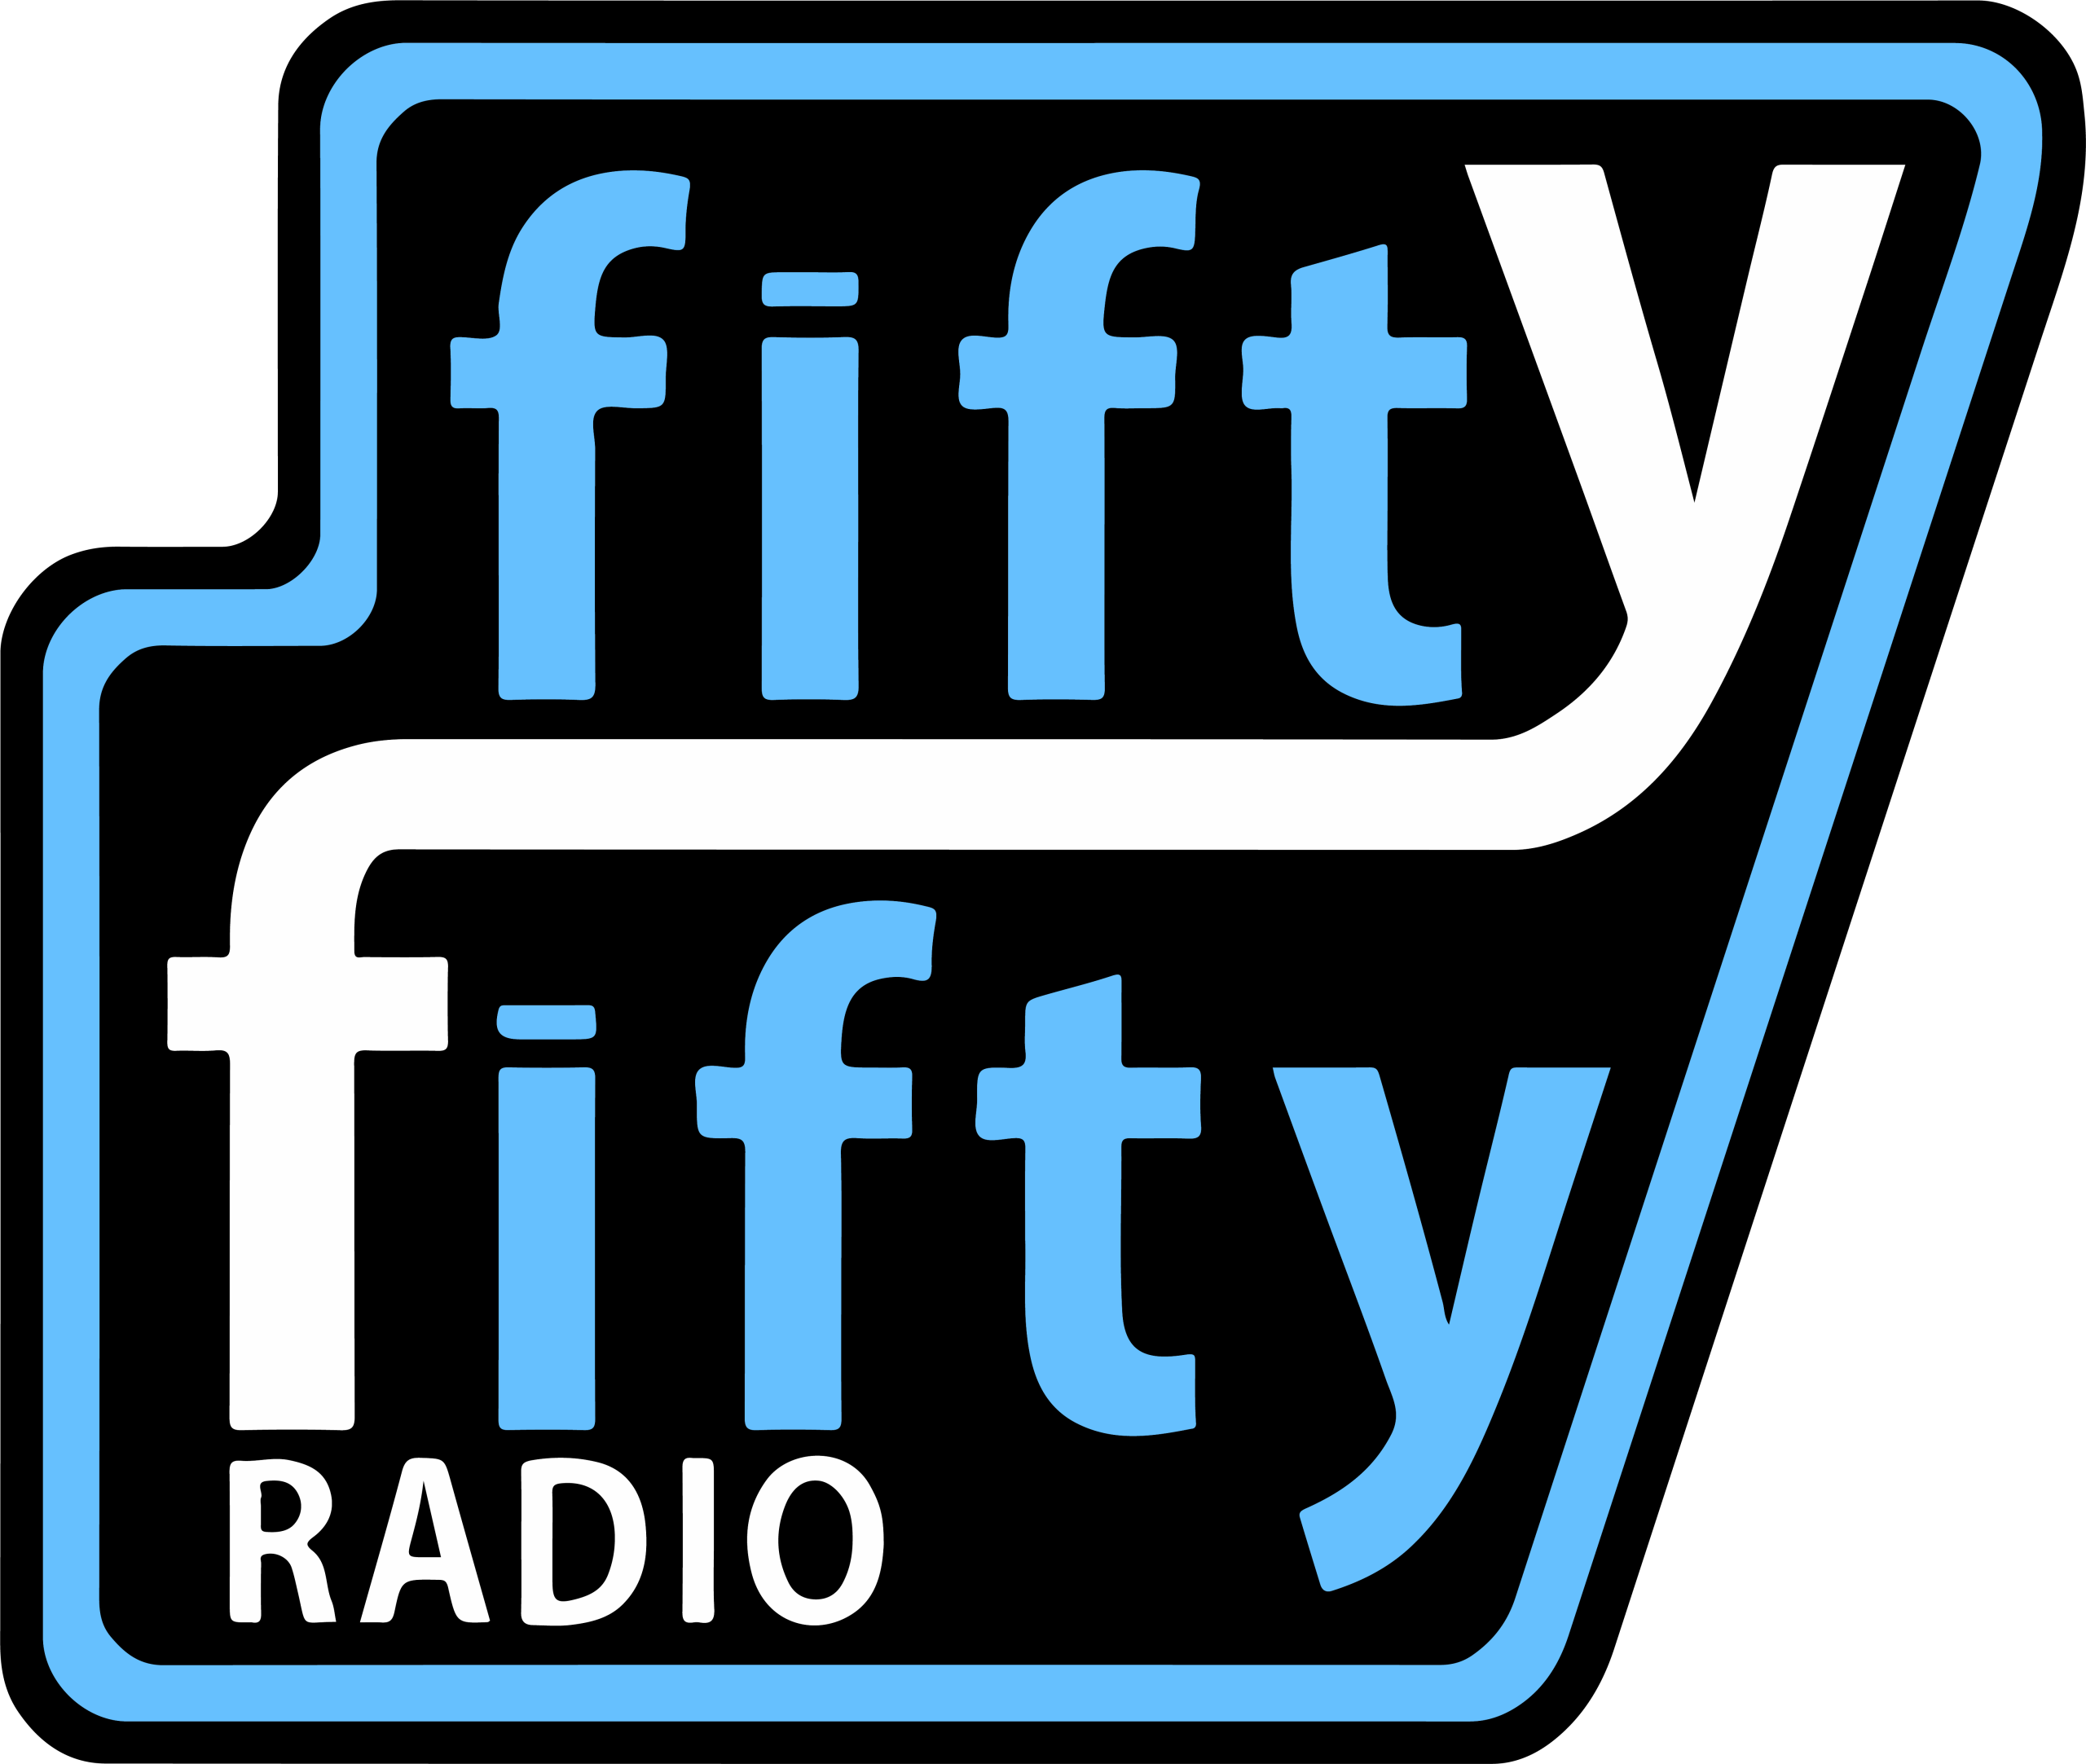 FiftyFifty Radio